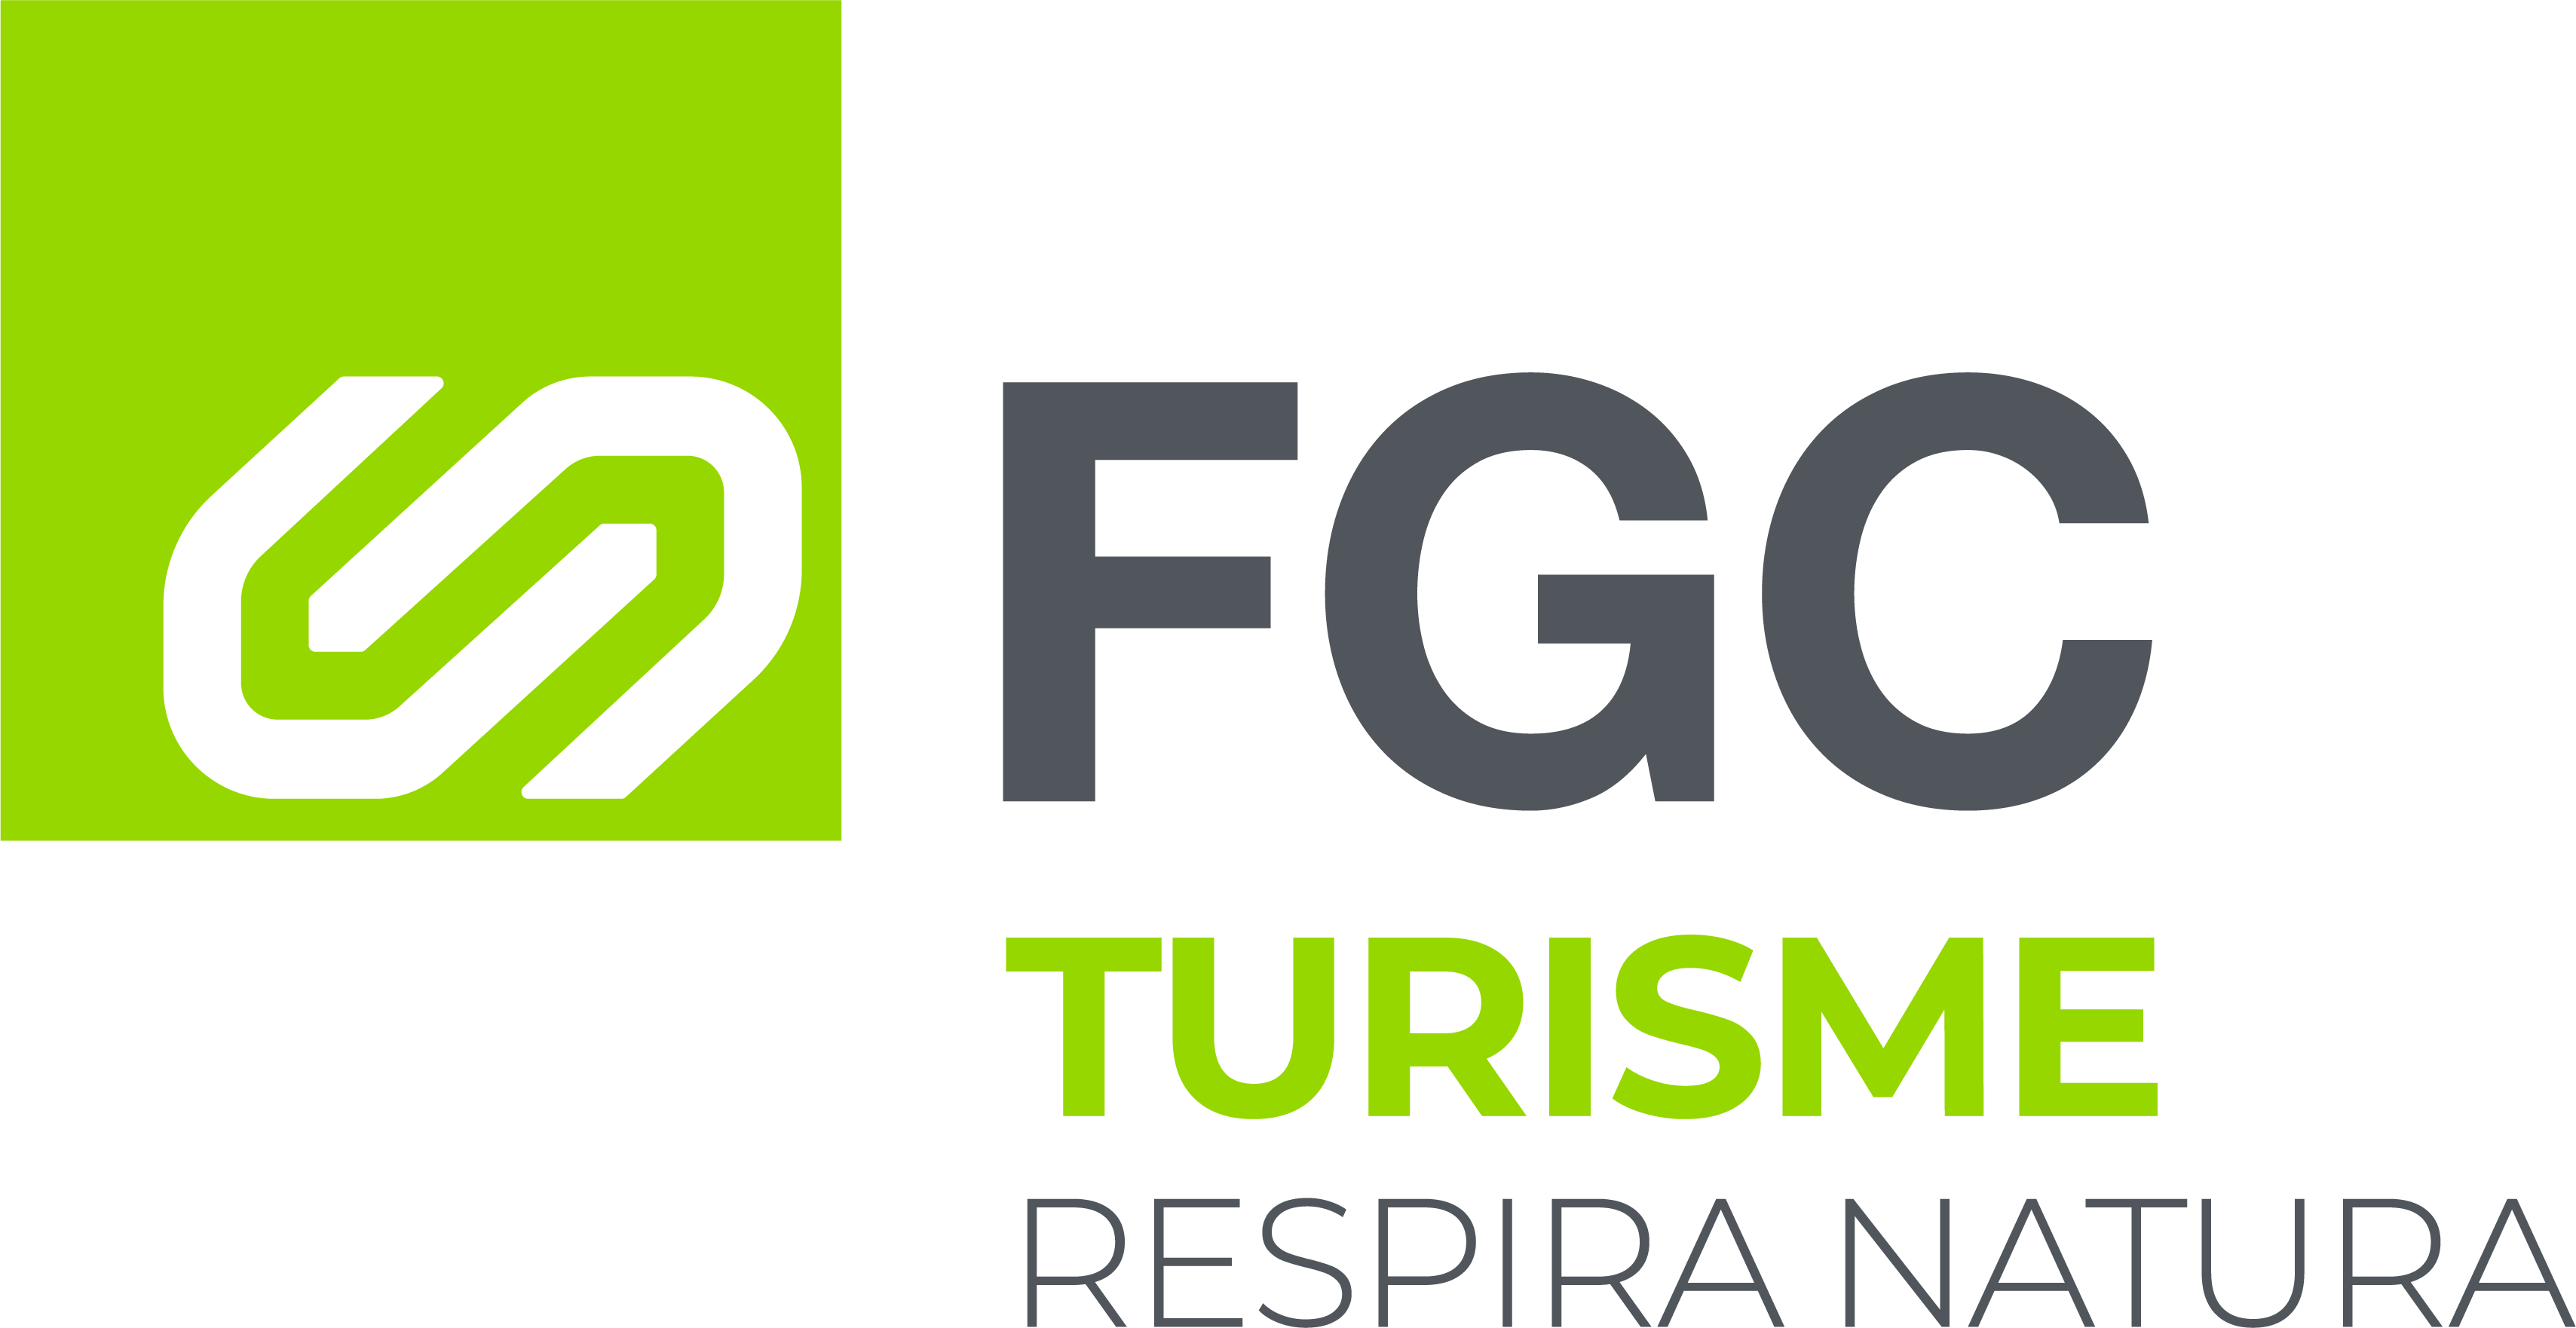 FGC Turisme